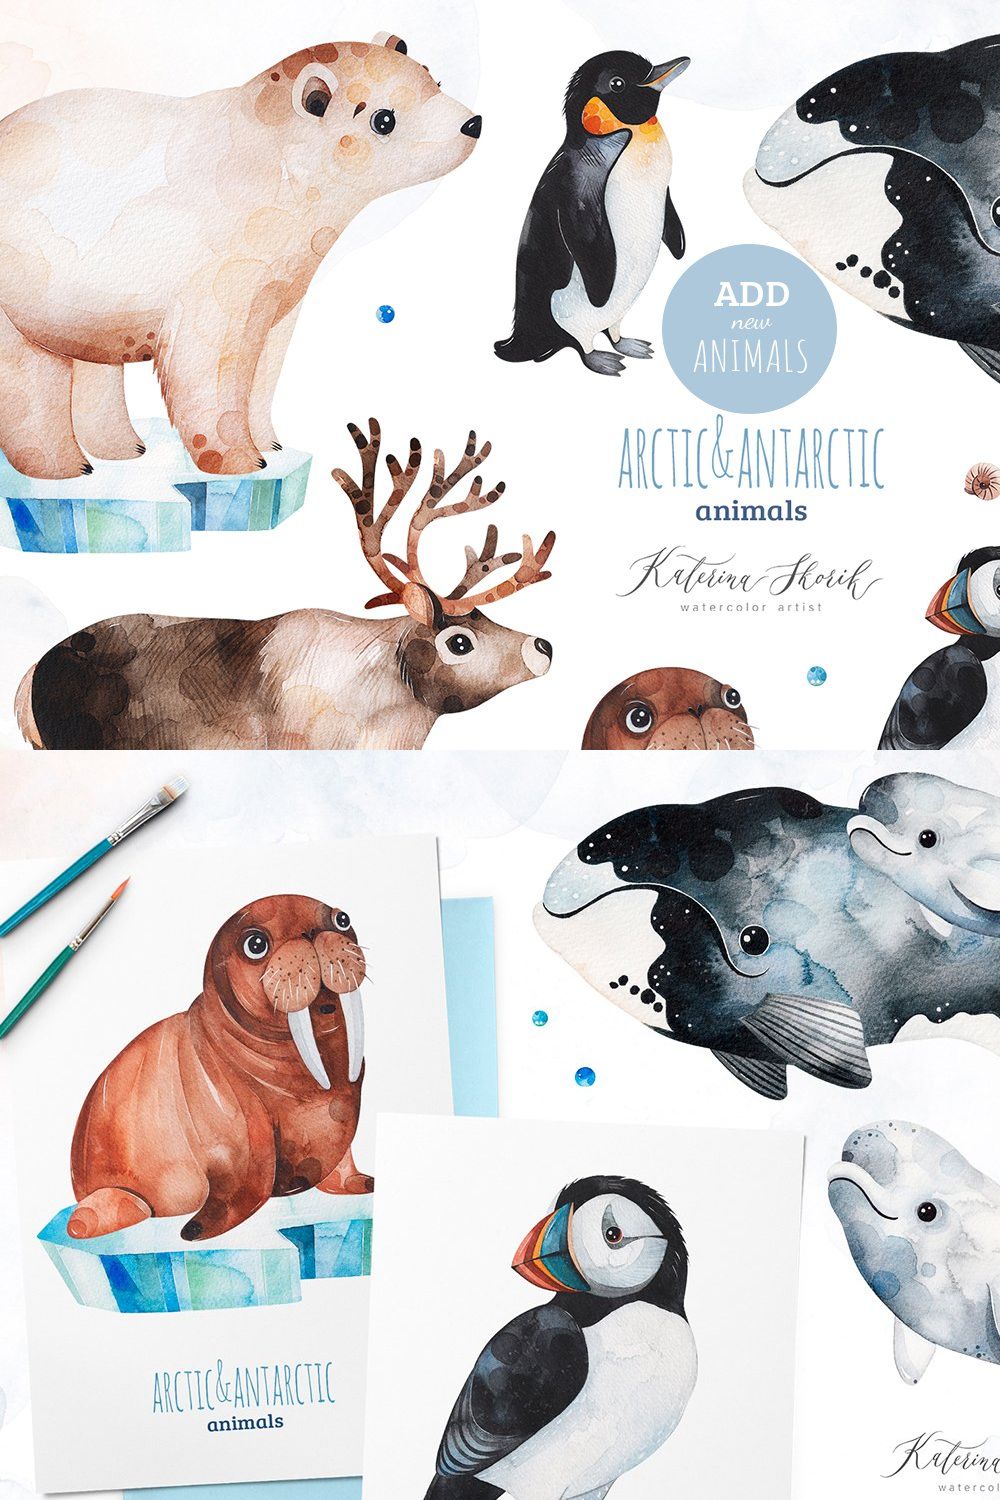 Arctic&Antarctic animals pinterest preview image.